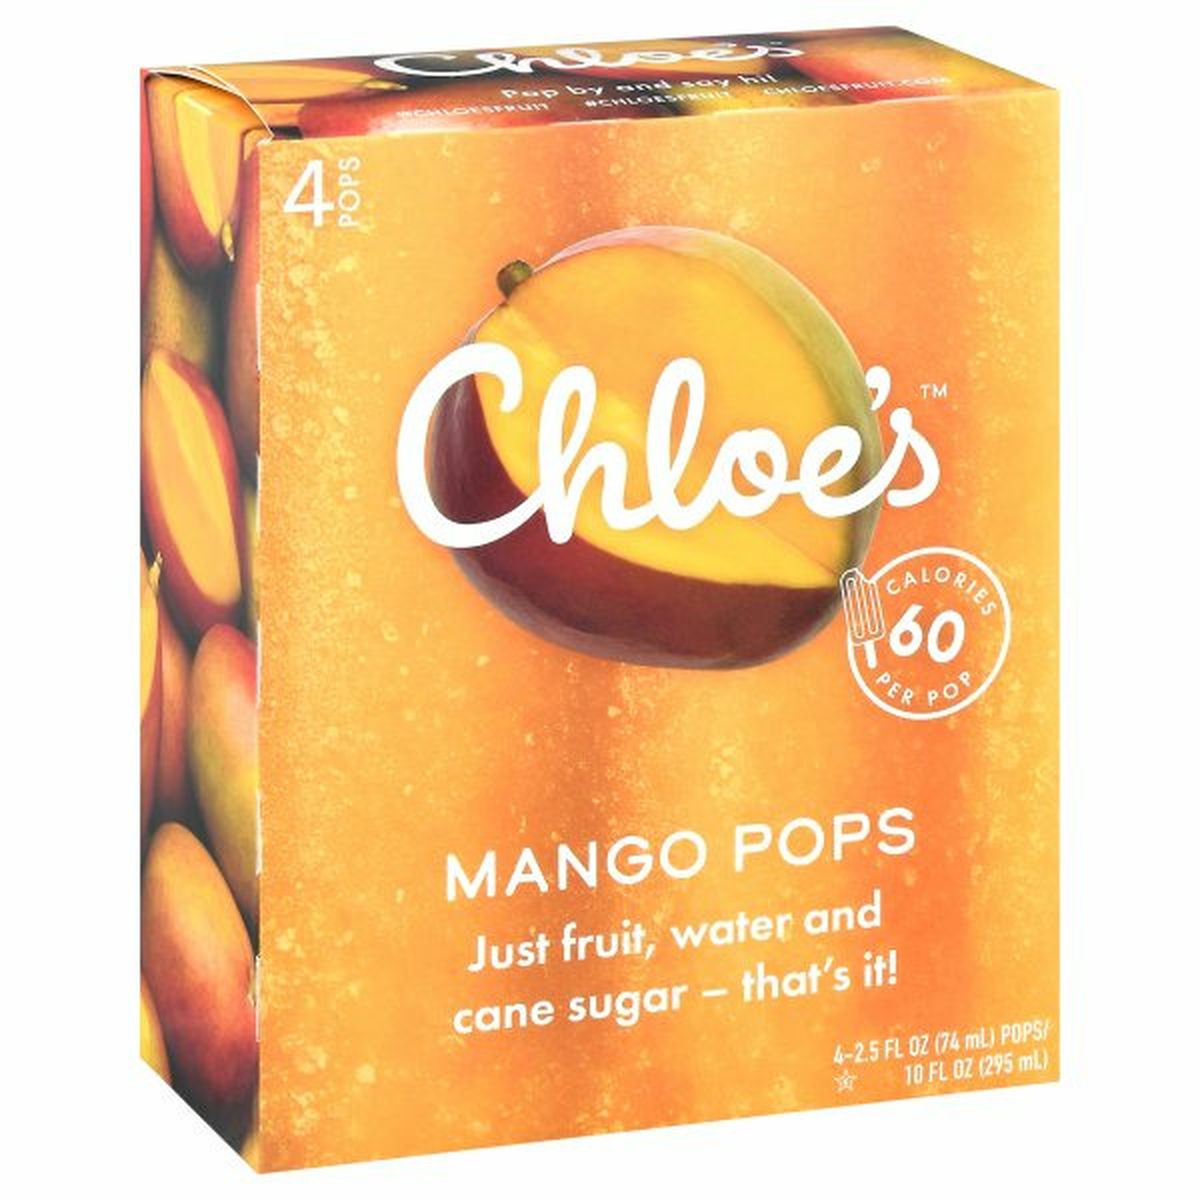 Calories in Chloe's Pops, Mango